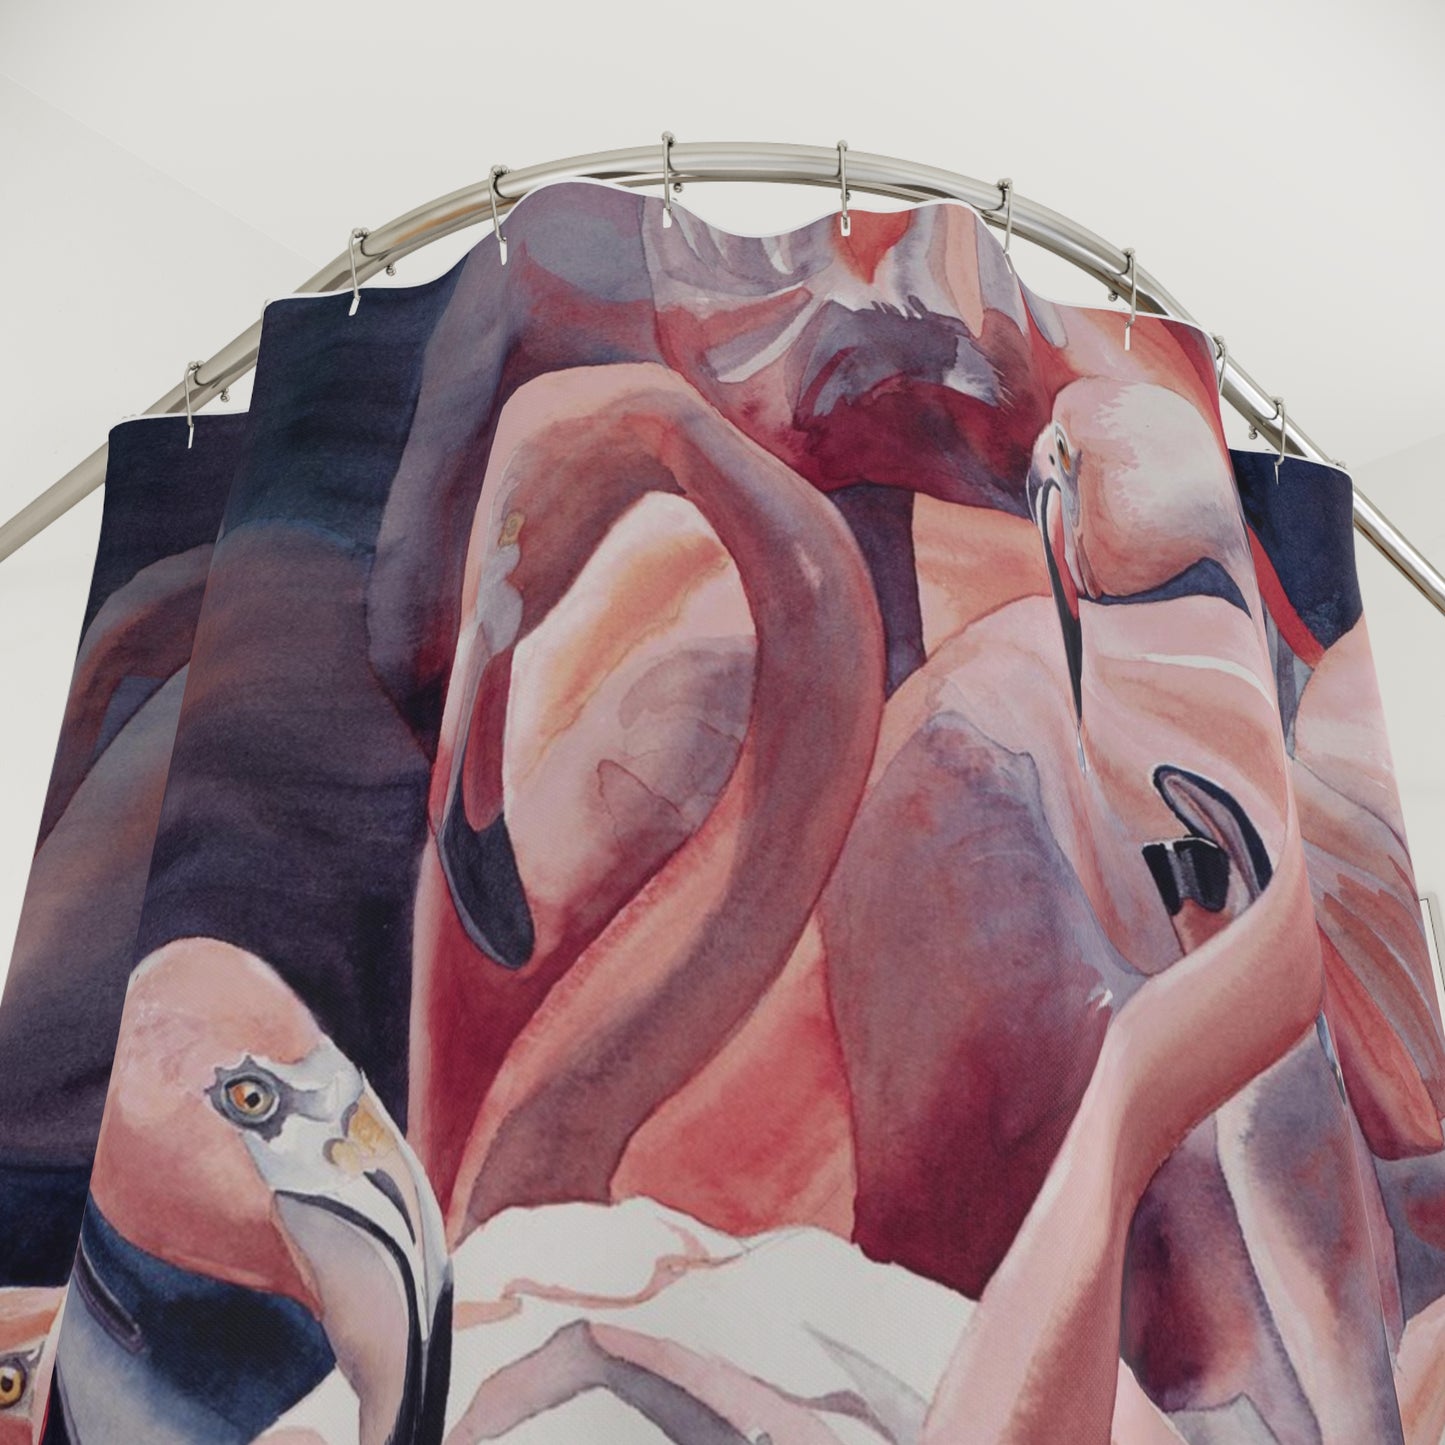 "Flamboyance" Polyester Shower Curtain